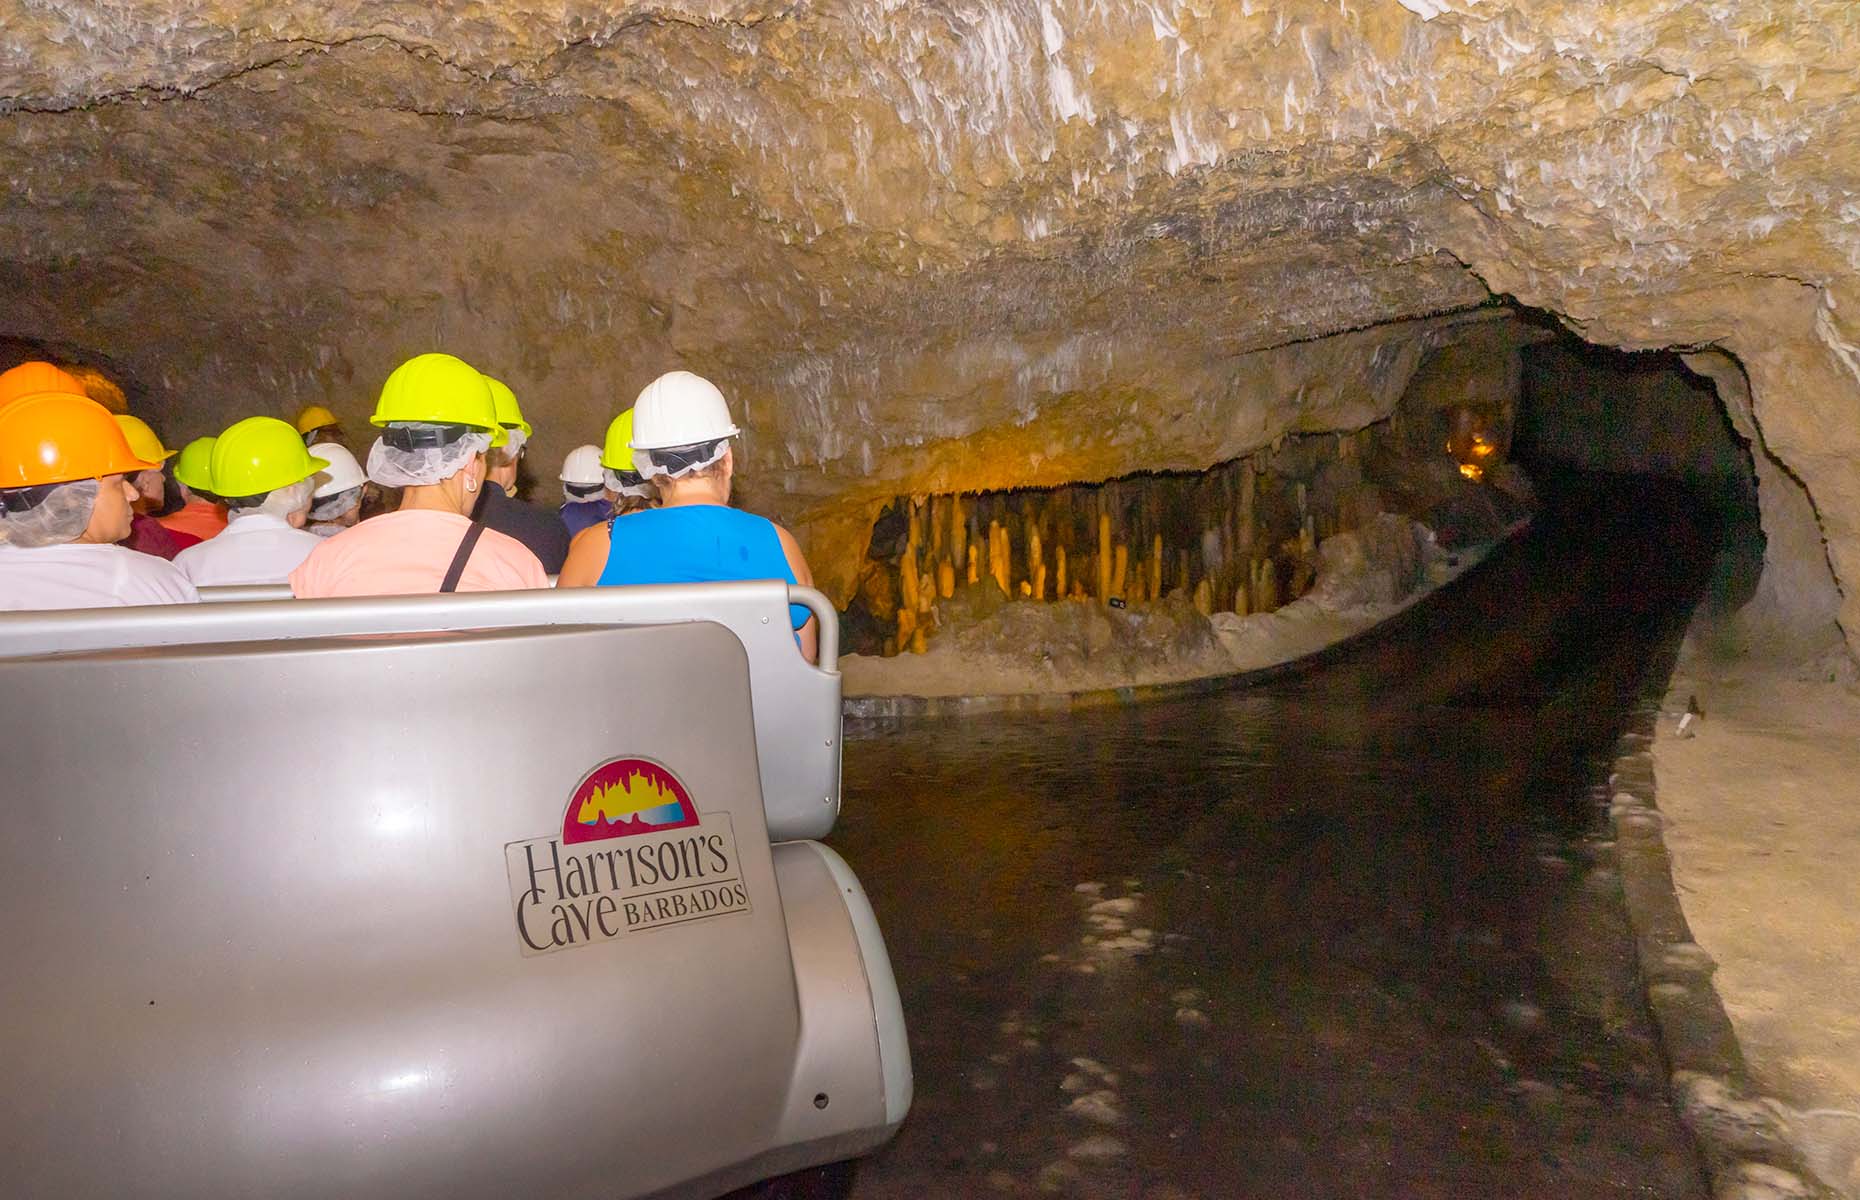 Harrison's Cave, Barbados. (Image: KLiK Photography/Shutterstock)